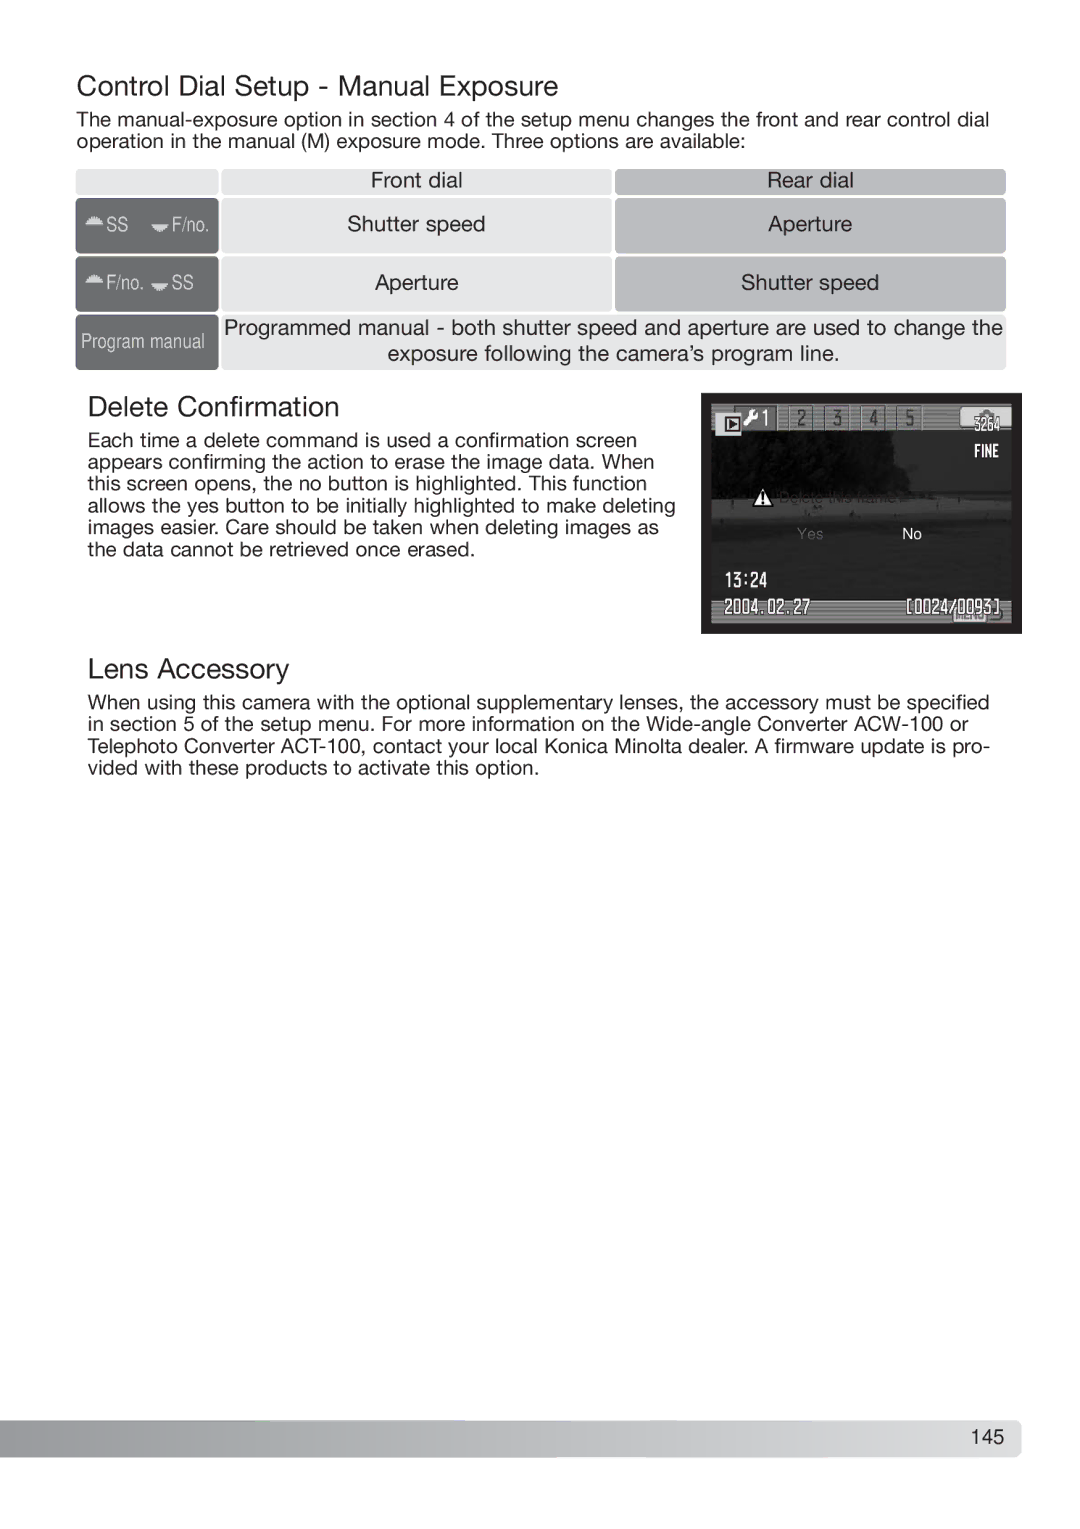 Konica Minolta DiMAGE_A2 instruction manual Control Dial Setup Manual Exposure, Delete Confirmation, Lens Accessory, 145 